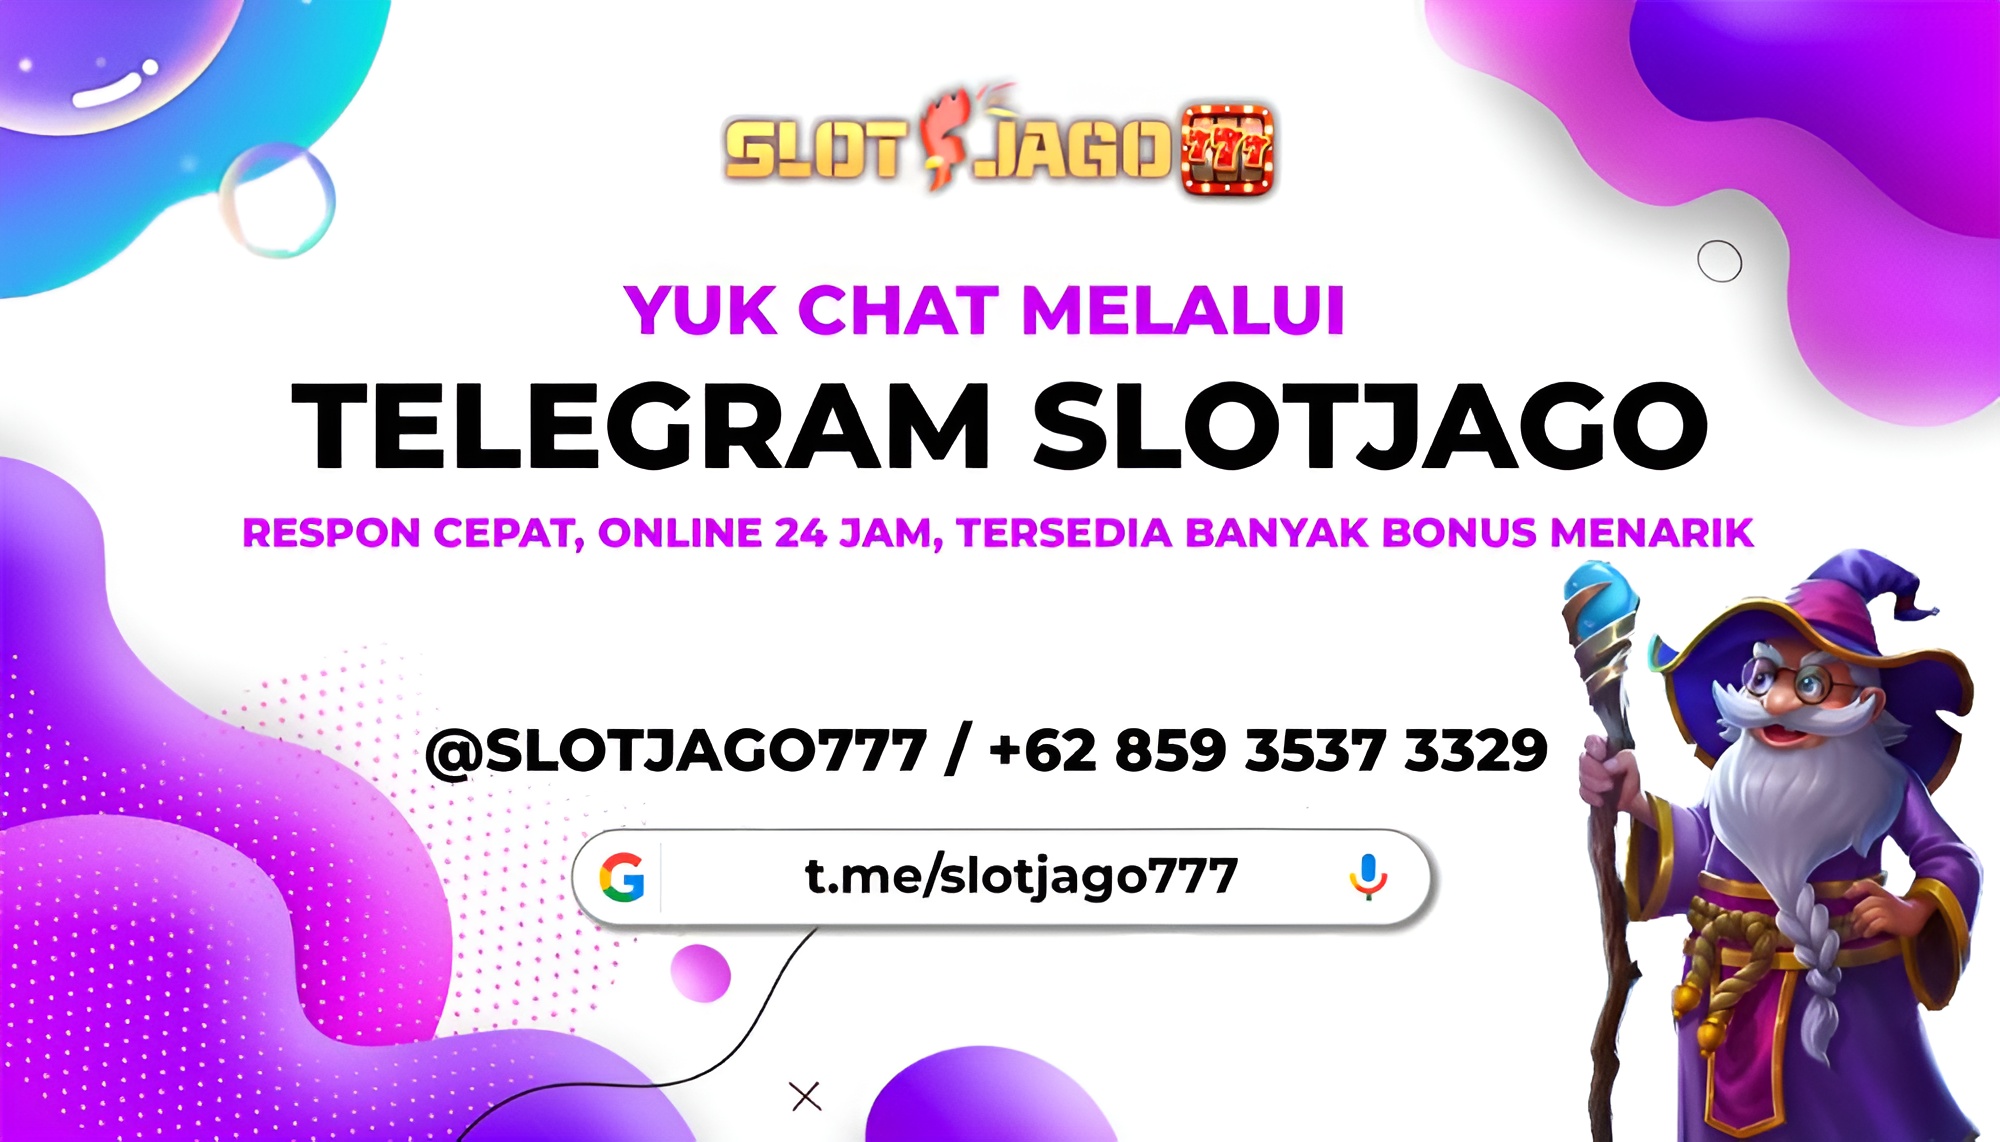 Telegram Slotjago